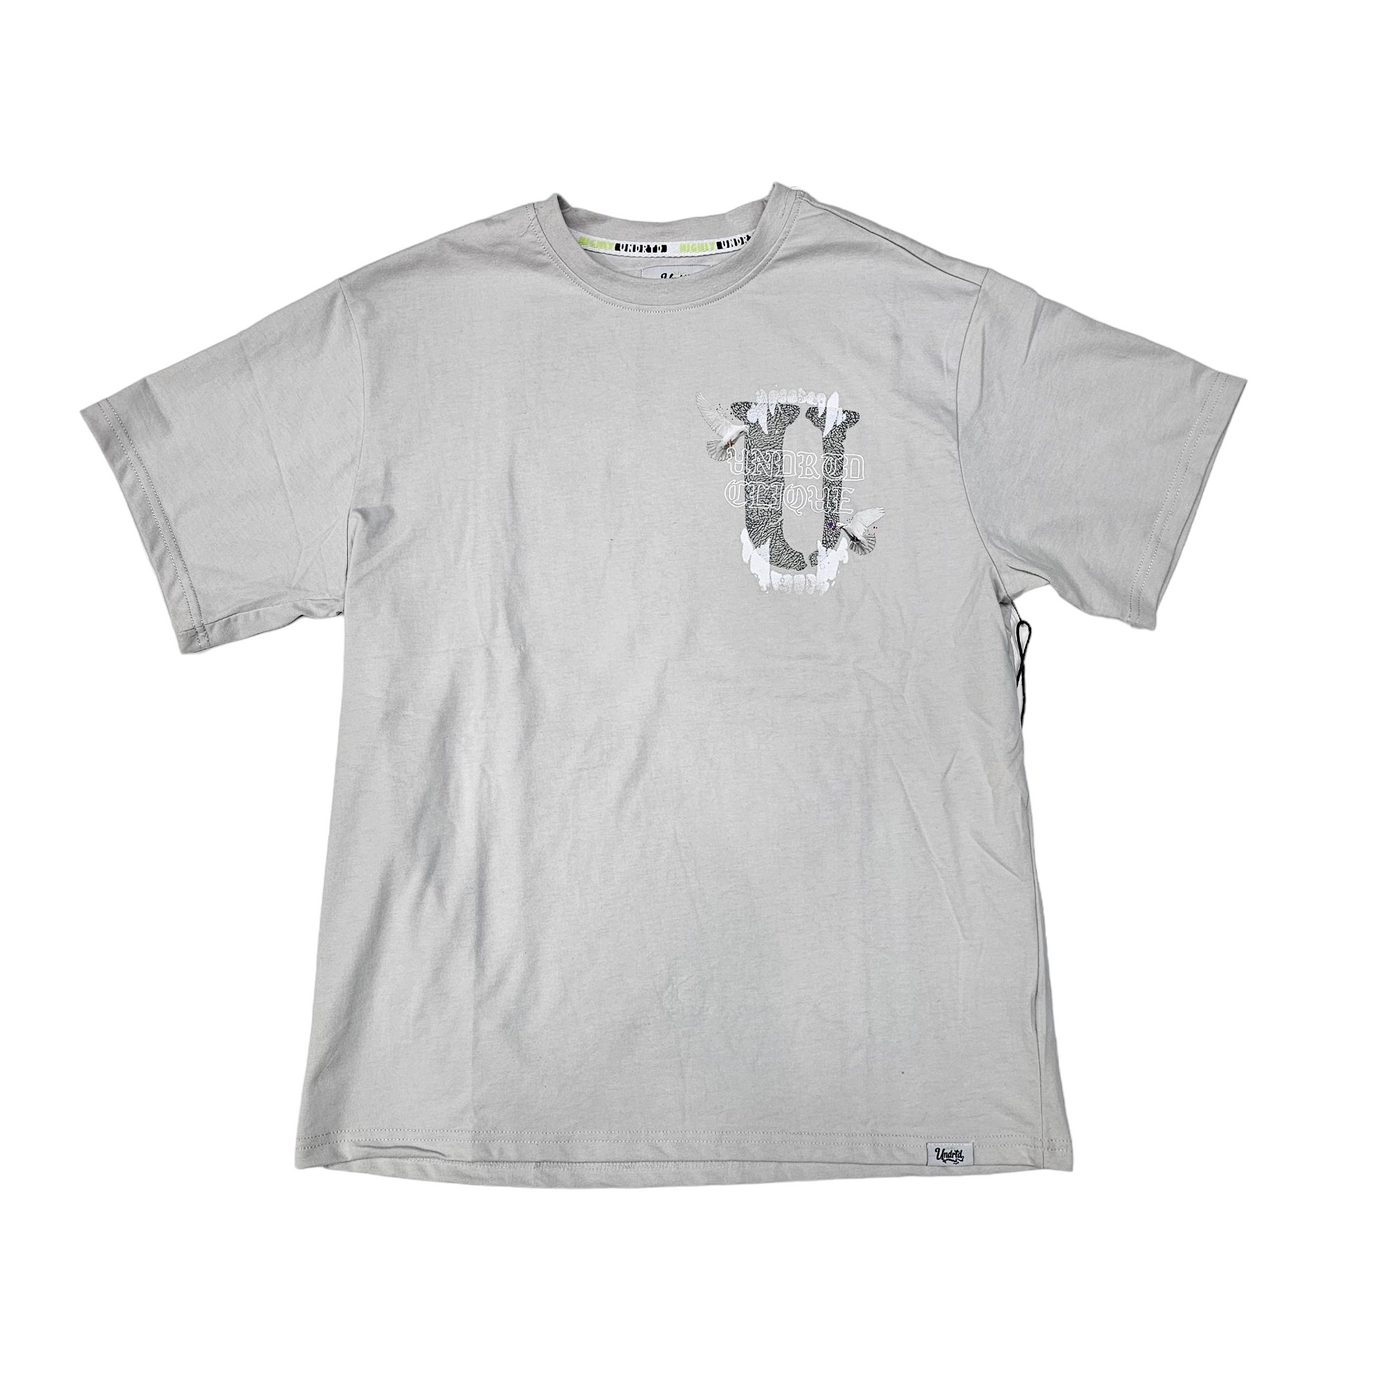 Highly Undrtd Clique Rolls T-Shirt Cloud US4103